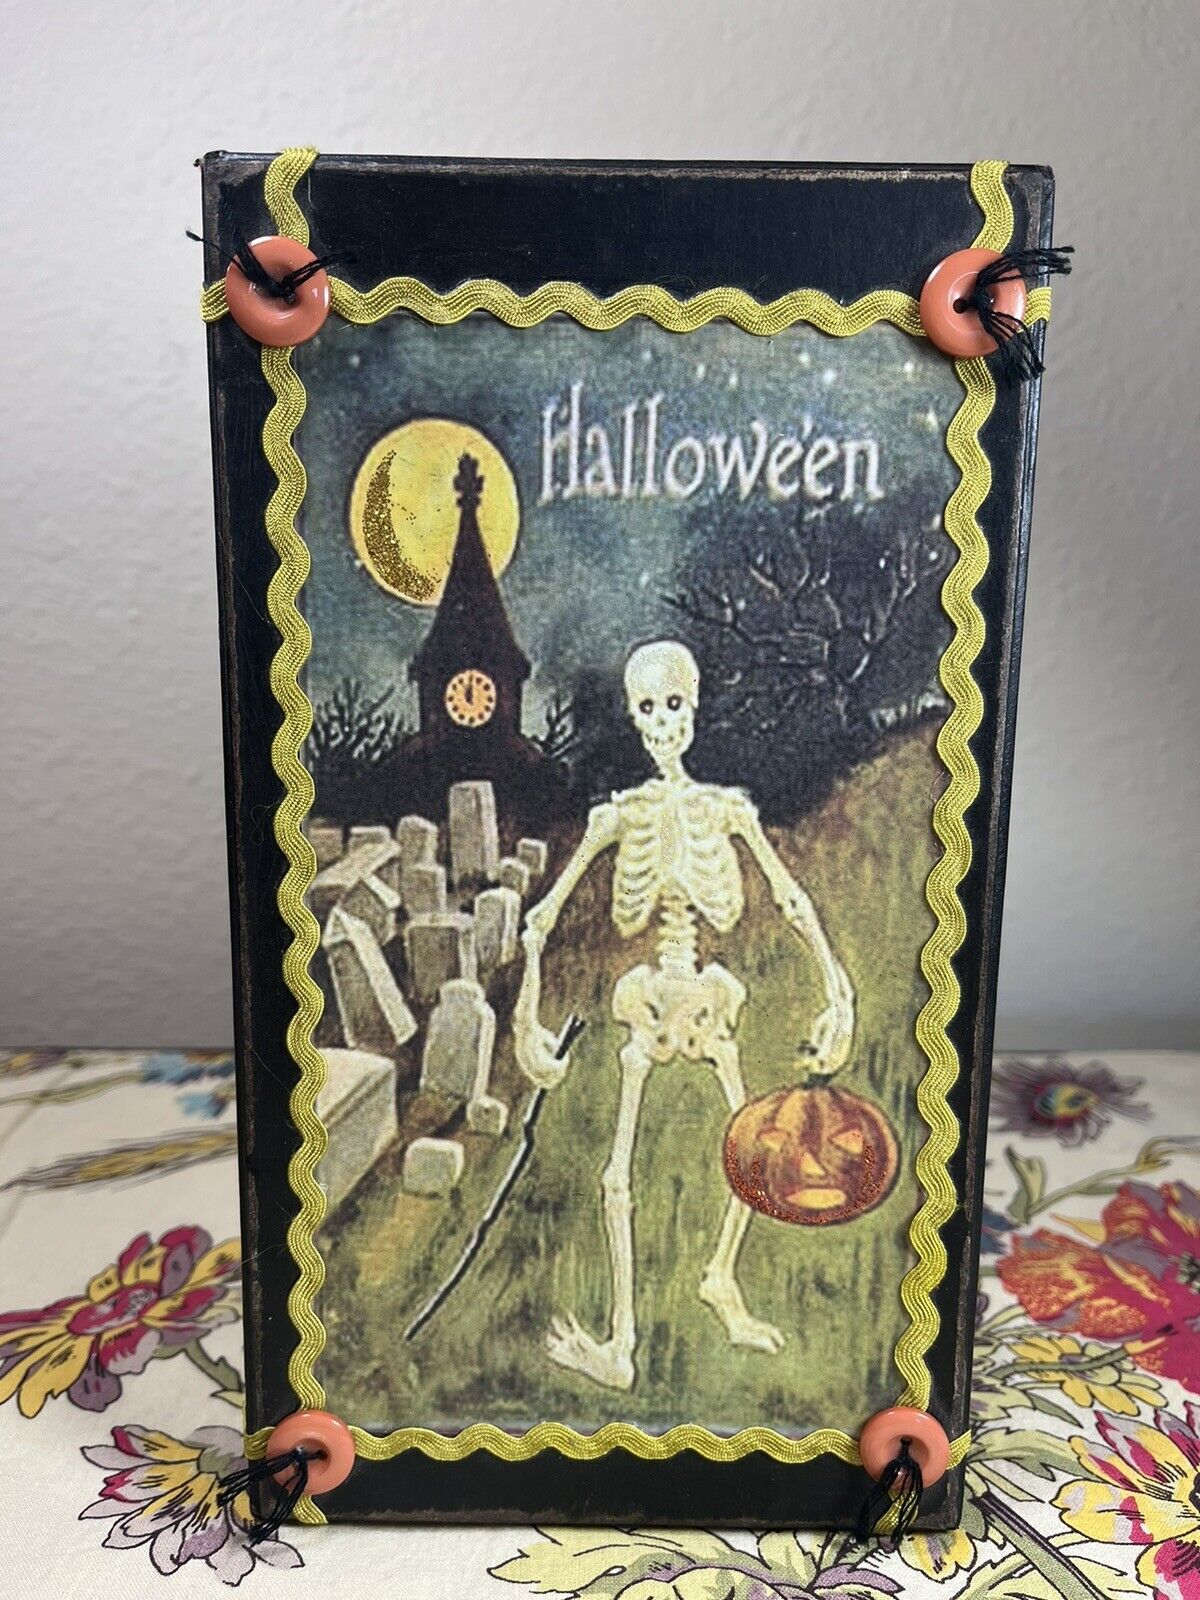 PRIMITIVES BY KATHY Halloween Skeleton Cardboard Vintage Decorative Box Folk Art